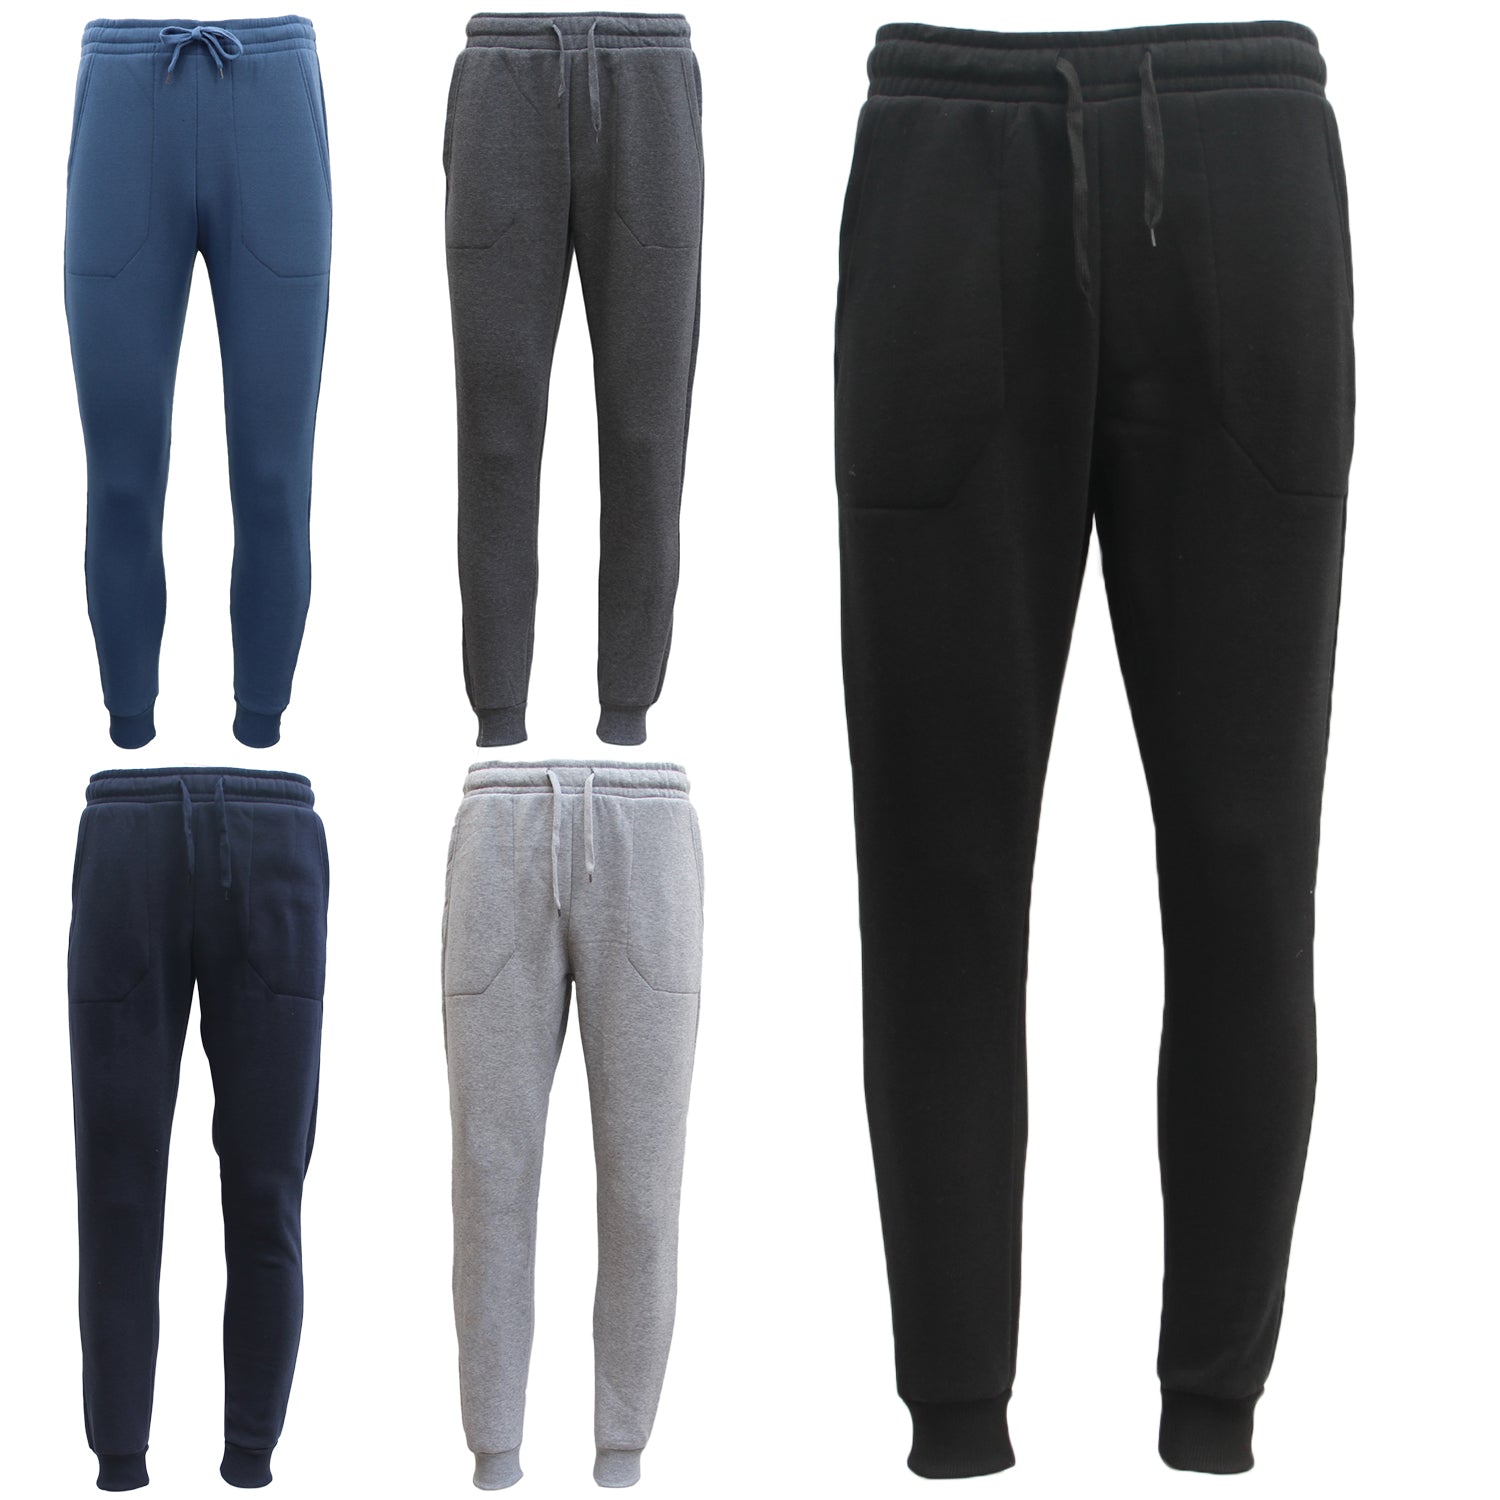 Mens Unisex Fleece Lined Sweat Track Pants Suit Casual Trackies Slim Cuff XS-6XL, Black, S